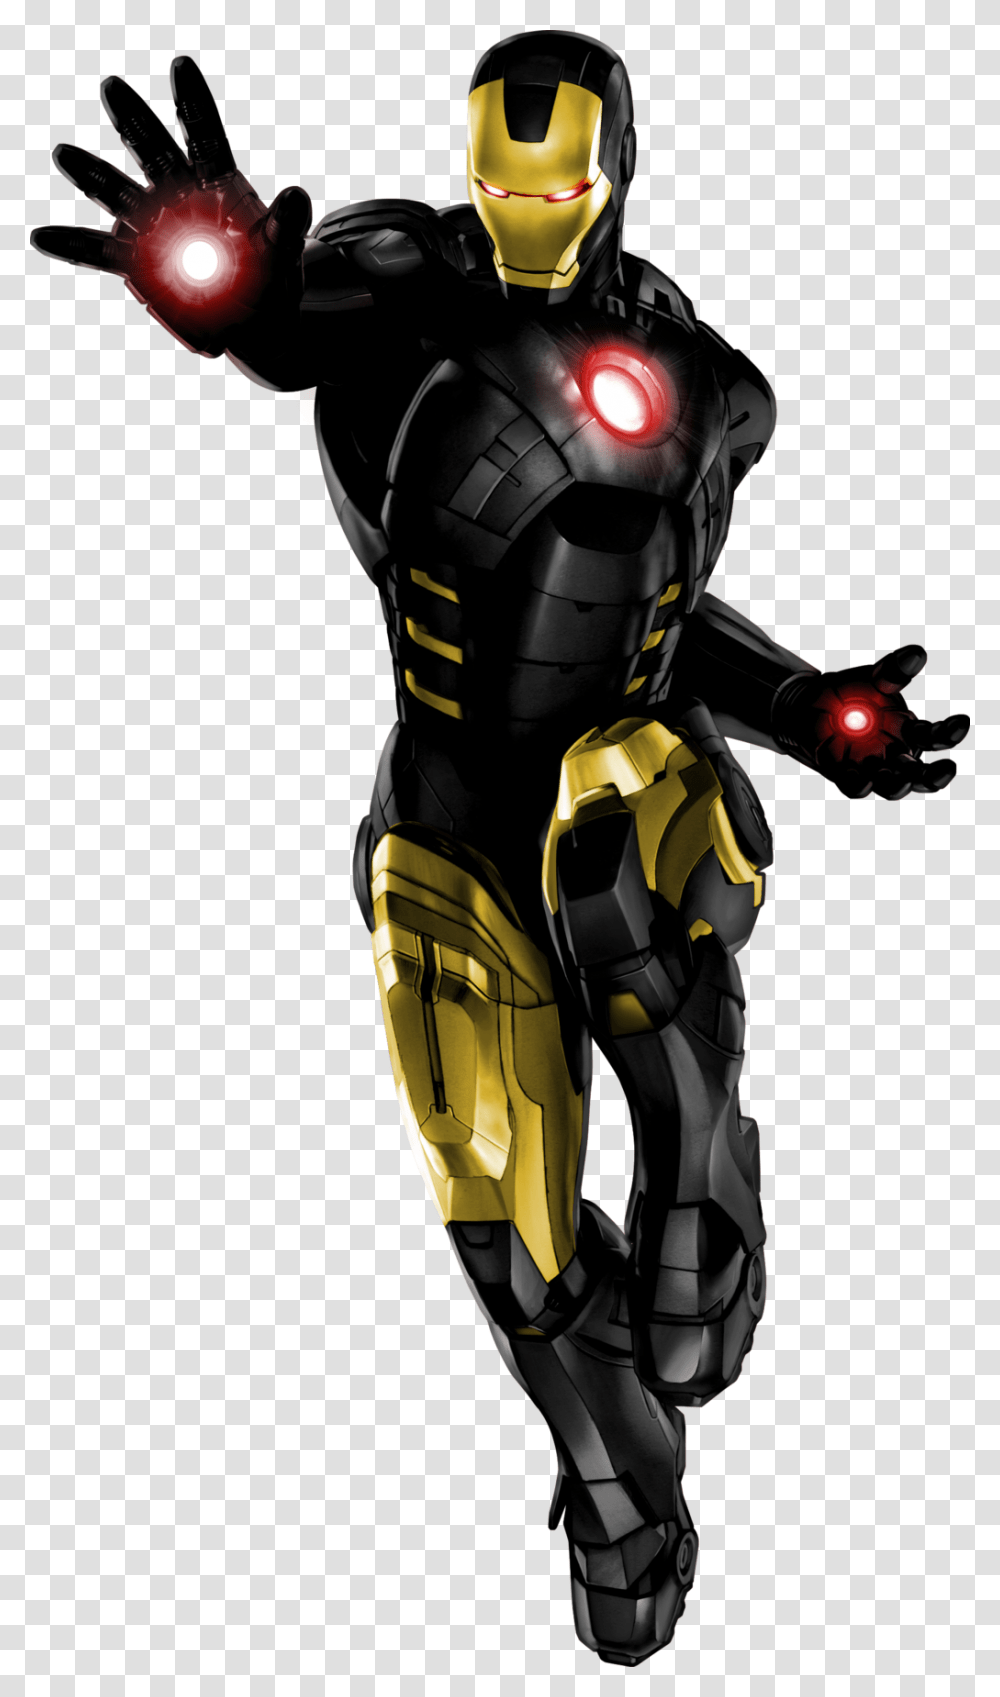 Man In Suit Clipart Iron Man Hd, Helmet, Apparel, Robot Transparent Png